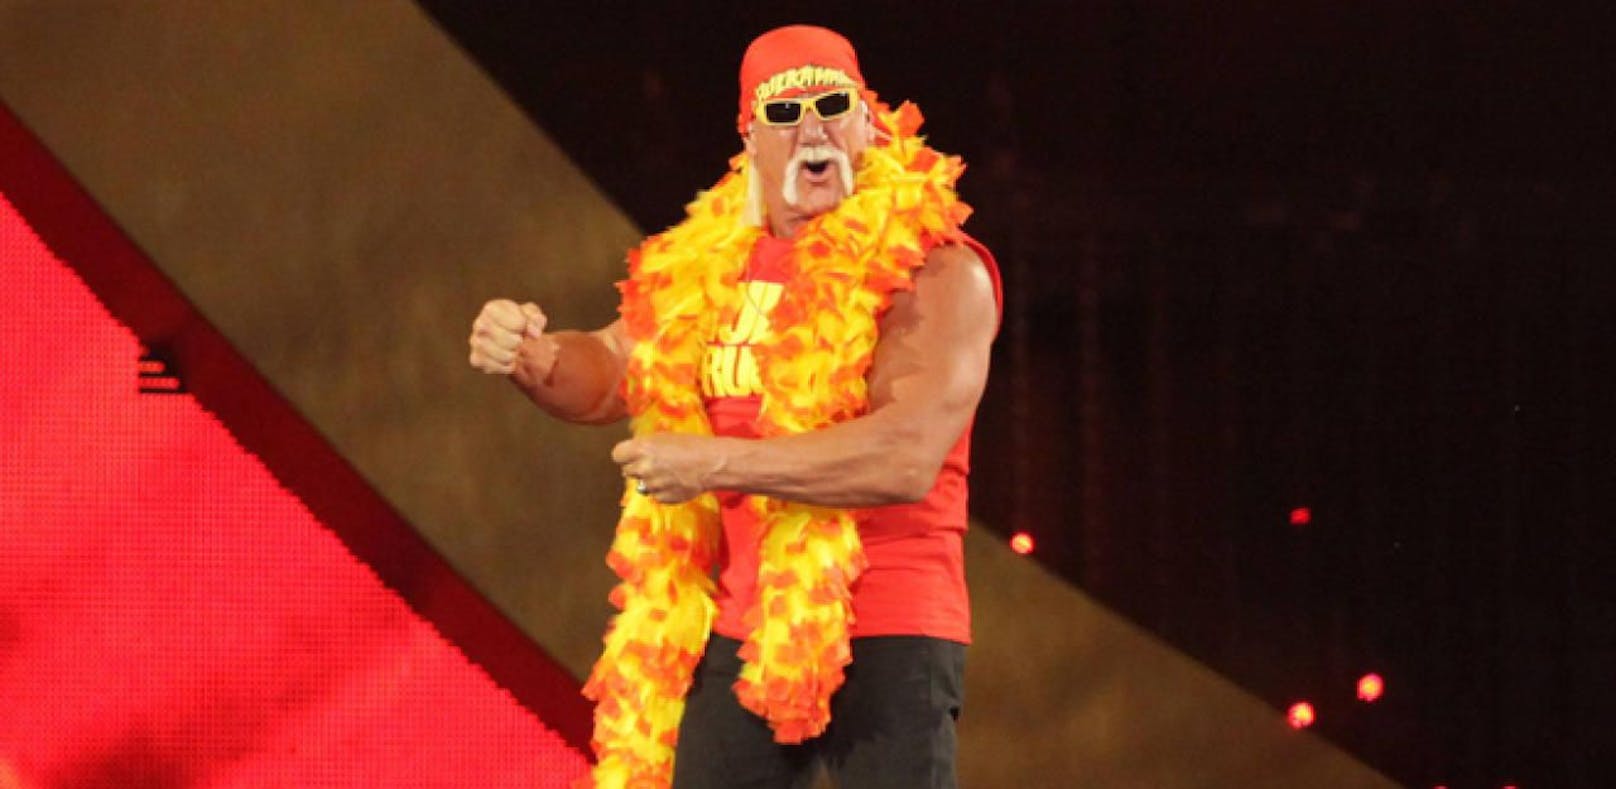 WWE begnadigt Wrestling-Ikone Hulk Hogan